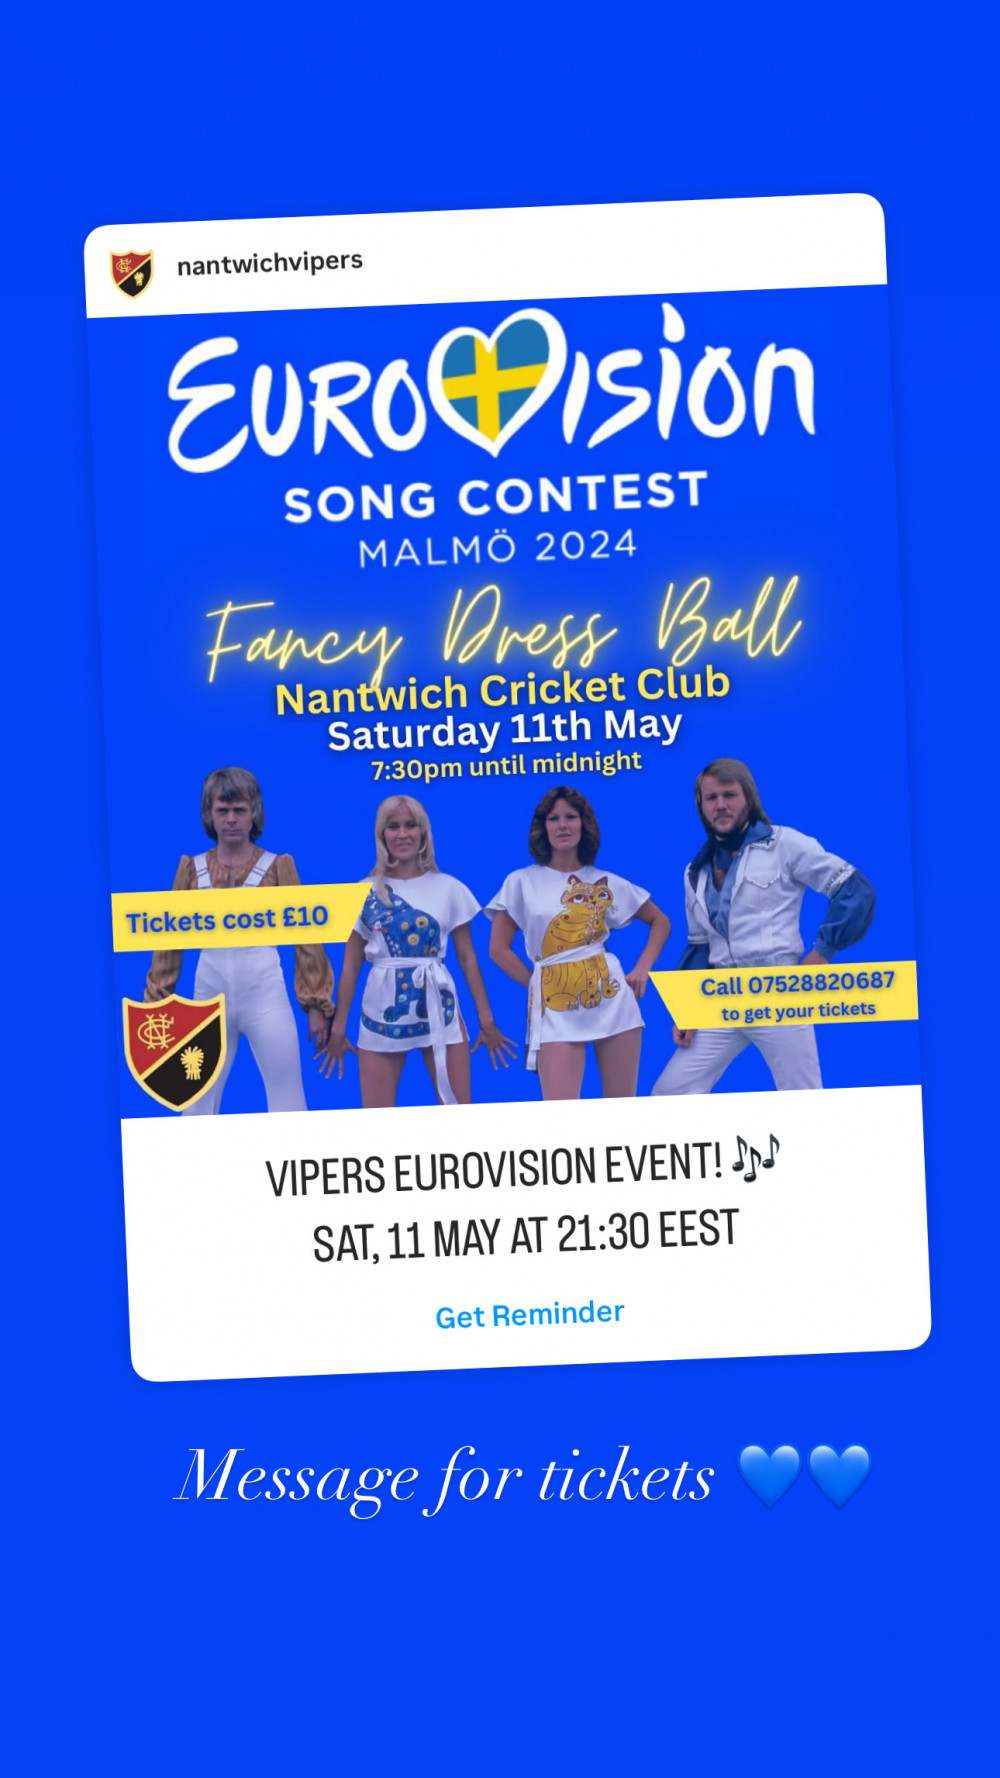 Nantwich Cricket Club Vipers Eurovision Fundraiser!